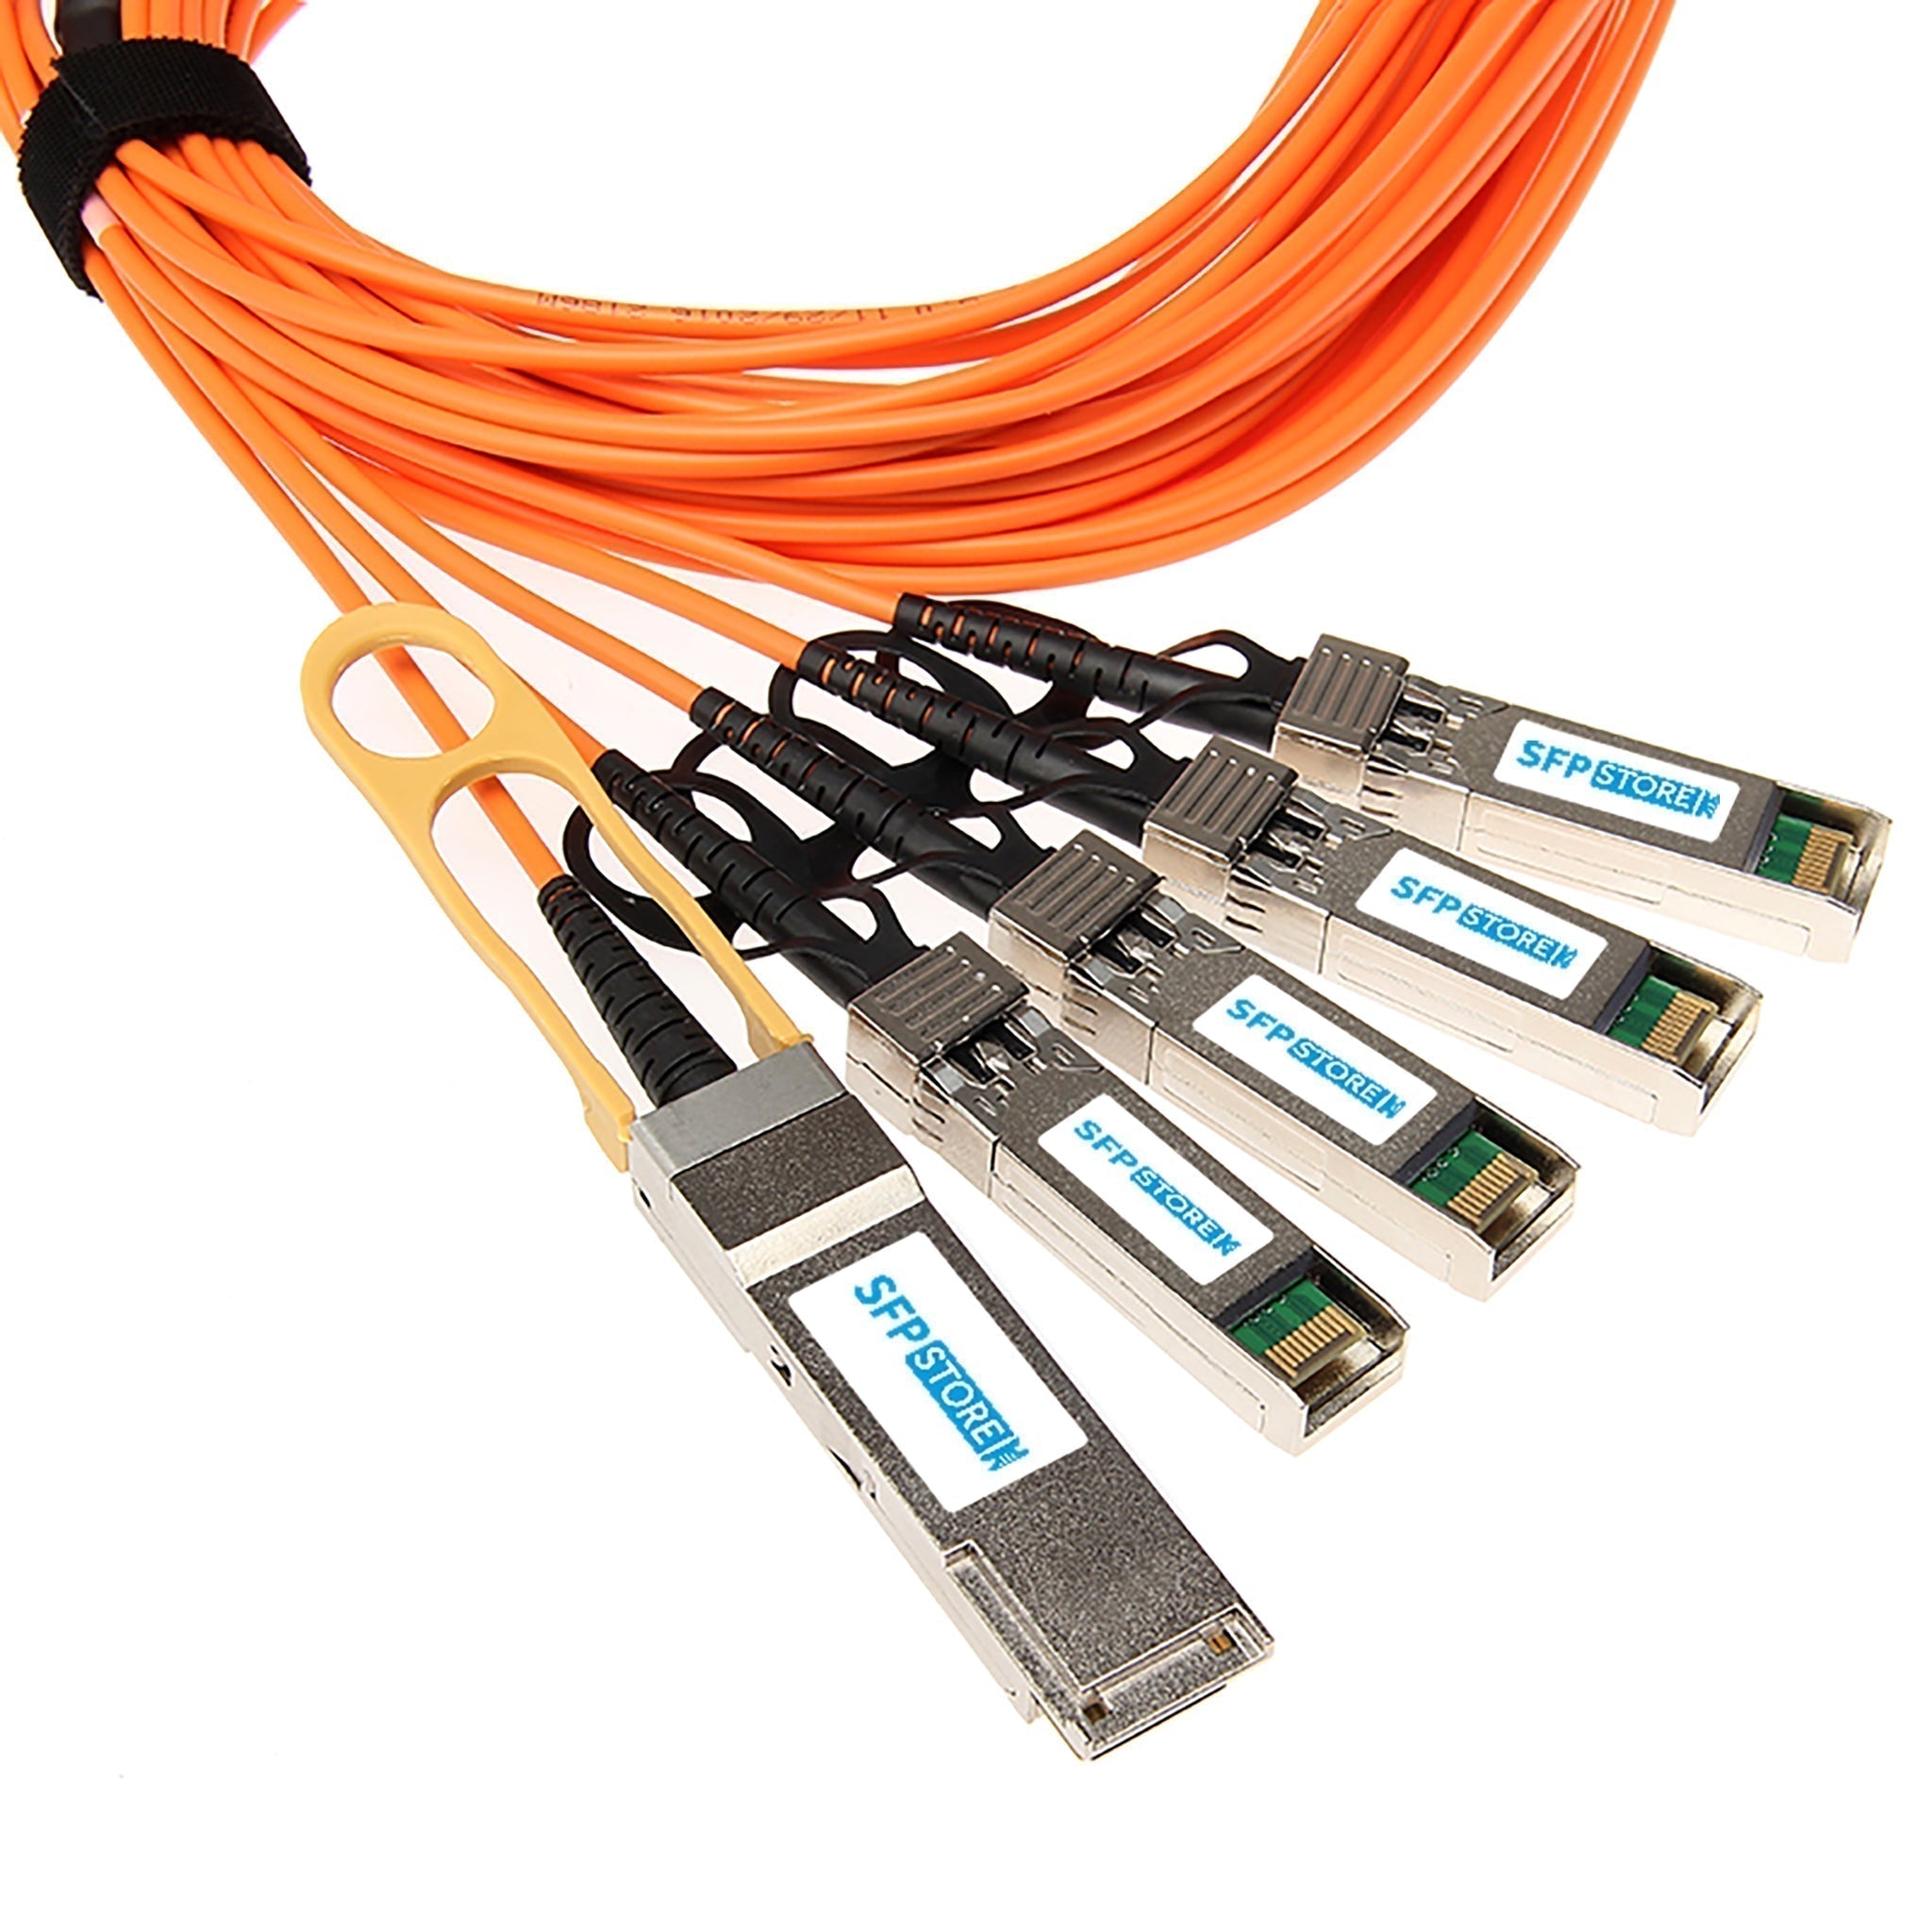 QSFP-4SFP25G-AOC10M-C - 10m Cisco Compatible 100G QSFP28 to 4 x 25G SFP28 Active Optical Cable